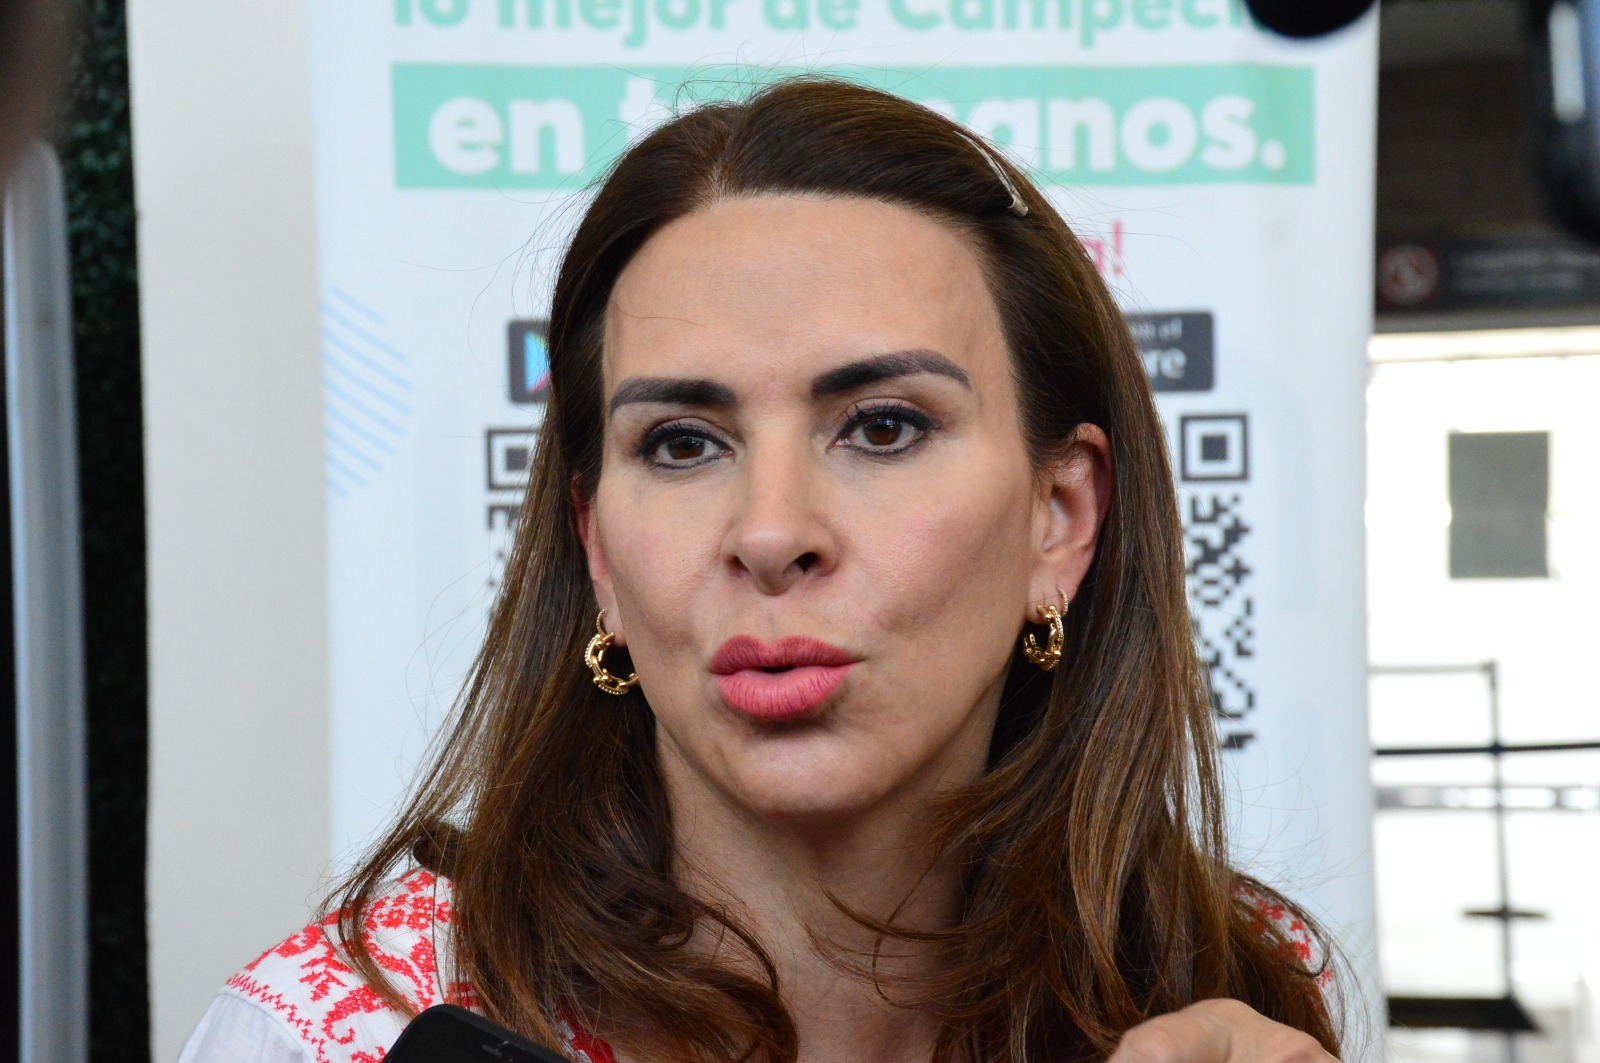 La secretaria Nacional del Partido Revolucionario Institucional (PRI), Carolina Viggiano Austria dio su postura al respecto